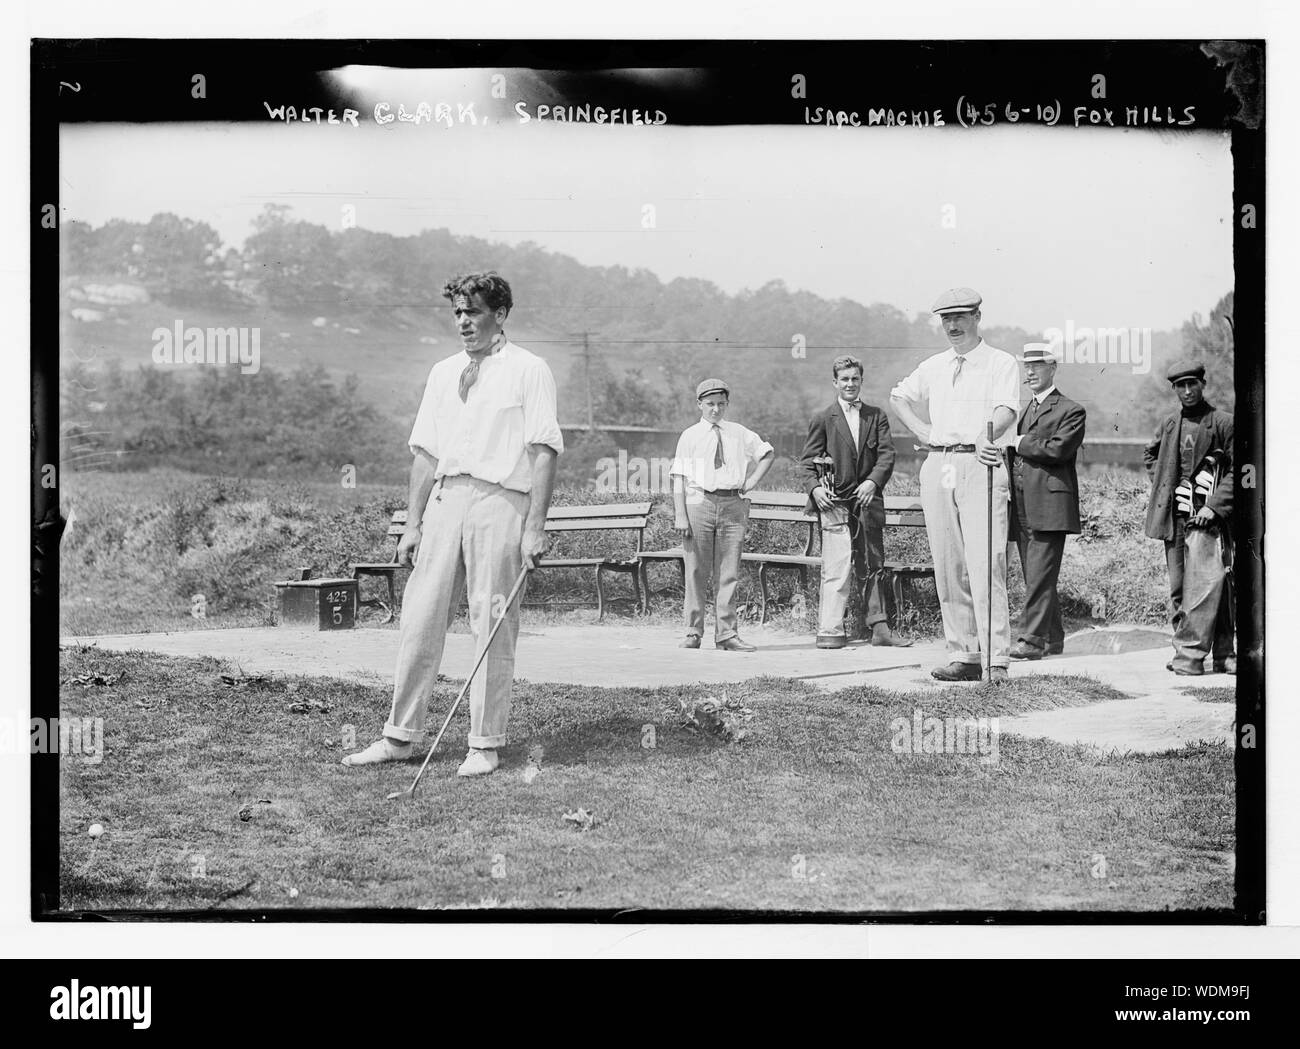 Match de golf] Walter Clark, Springfield et Isaac Mackie, Fox Hills Abstract/moyenne : 1 négative : 5 x 7 in. ou moins. Banque D'Images